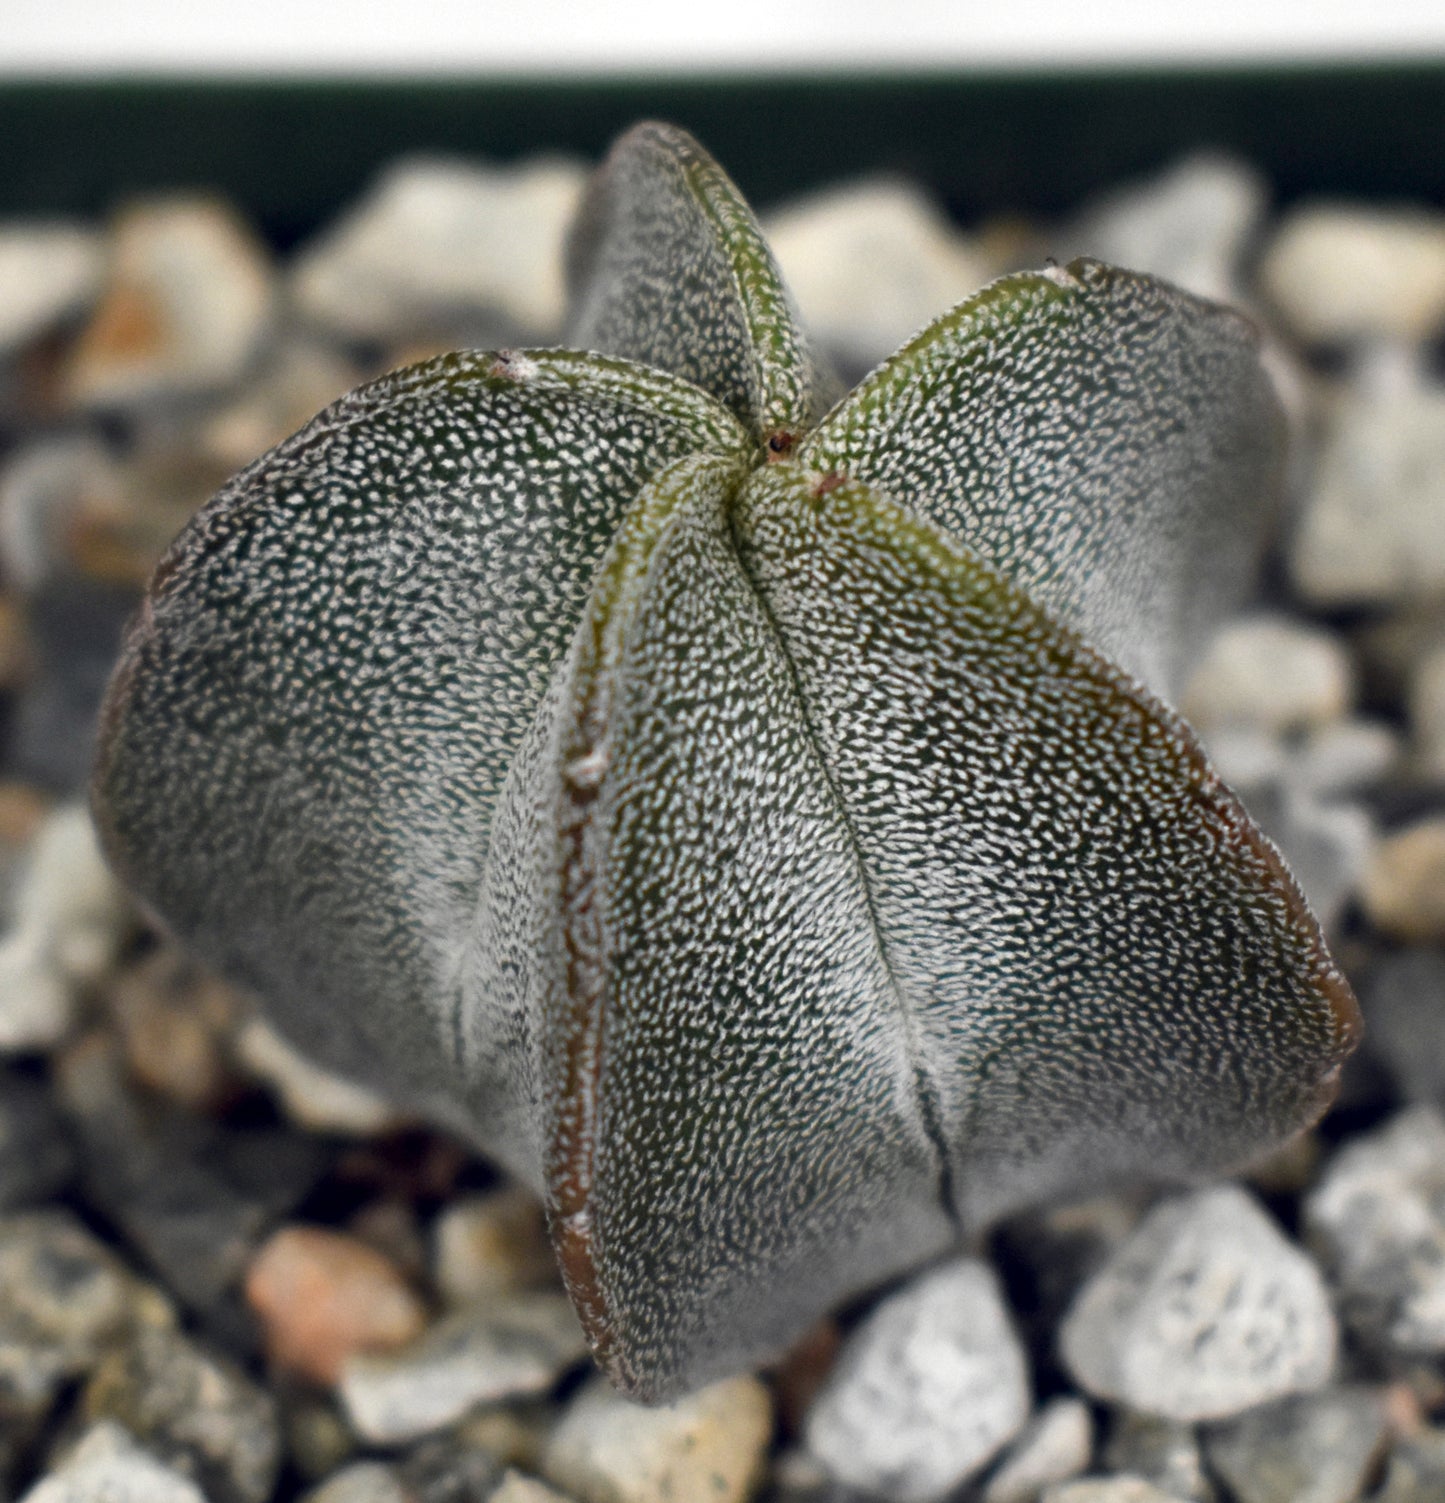 Astrophytum columnare Live Cactus In 4 Inch